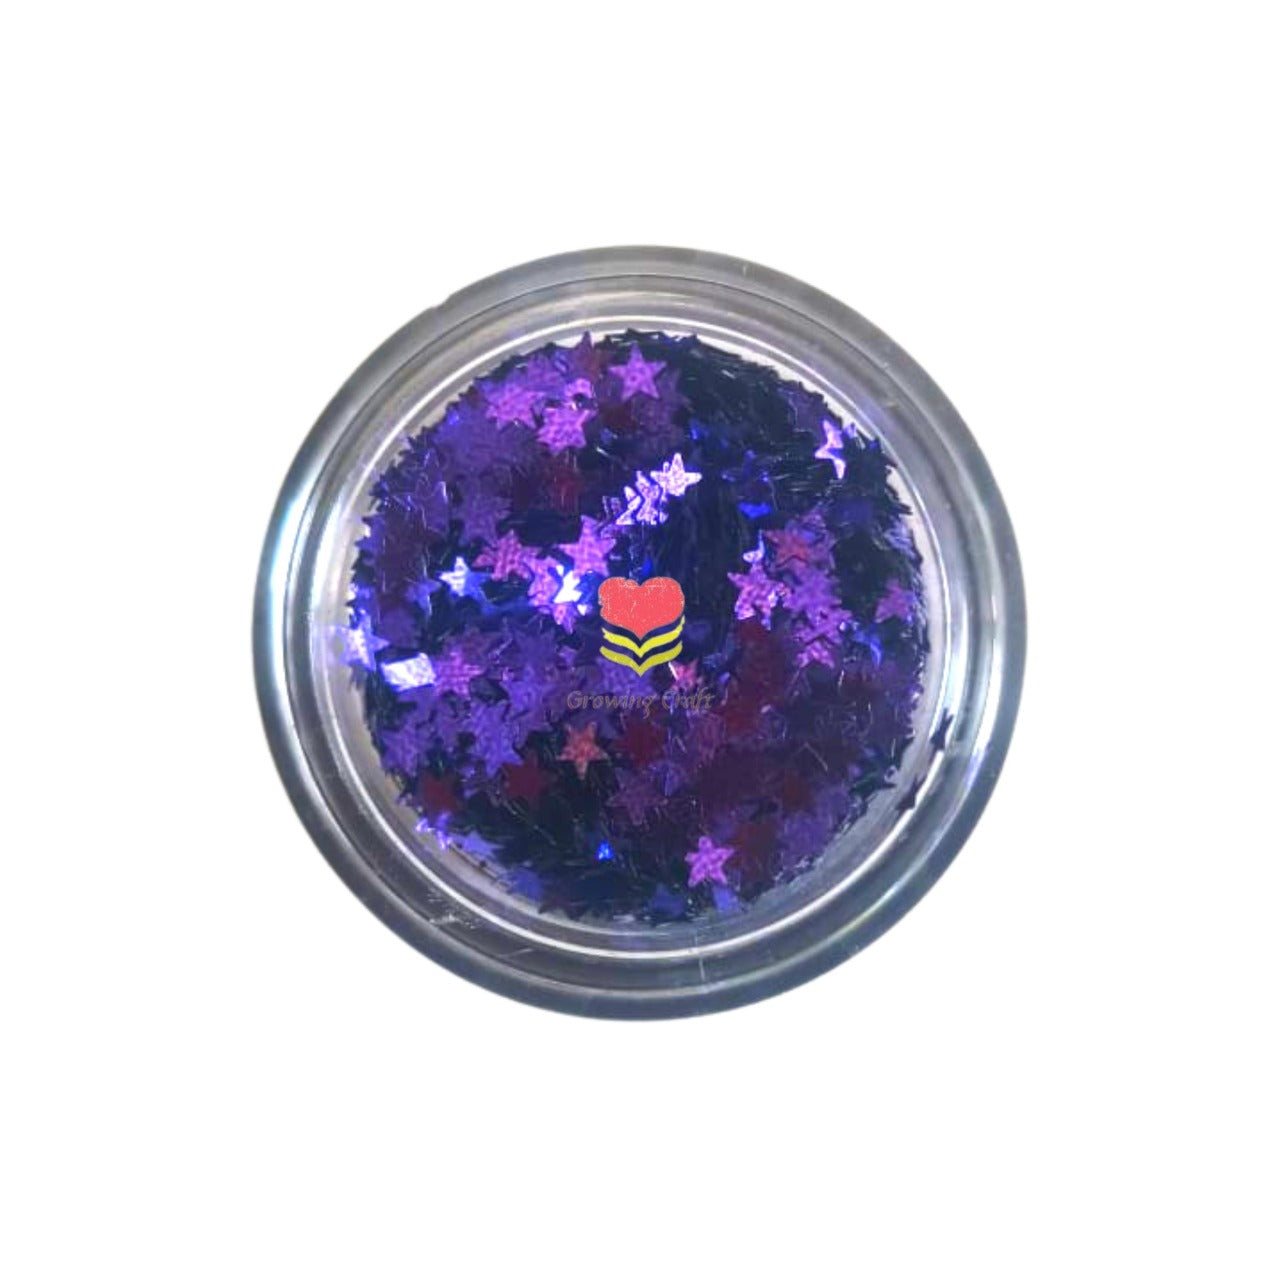 Sequence Fillers - GCSQ 439 - Purple Star - Growing Craft - Best craft Supplies